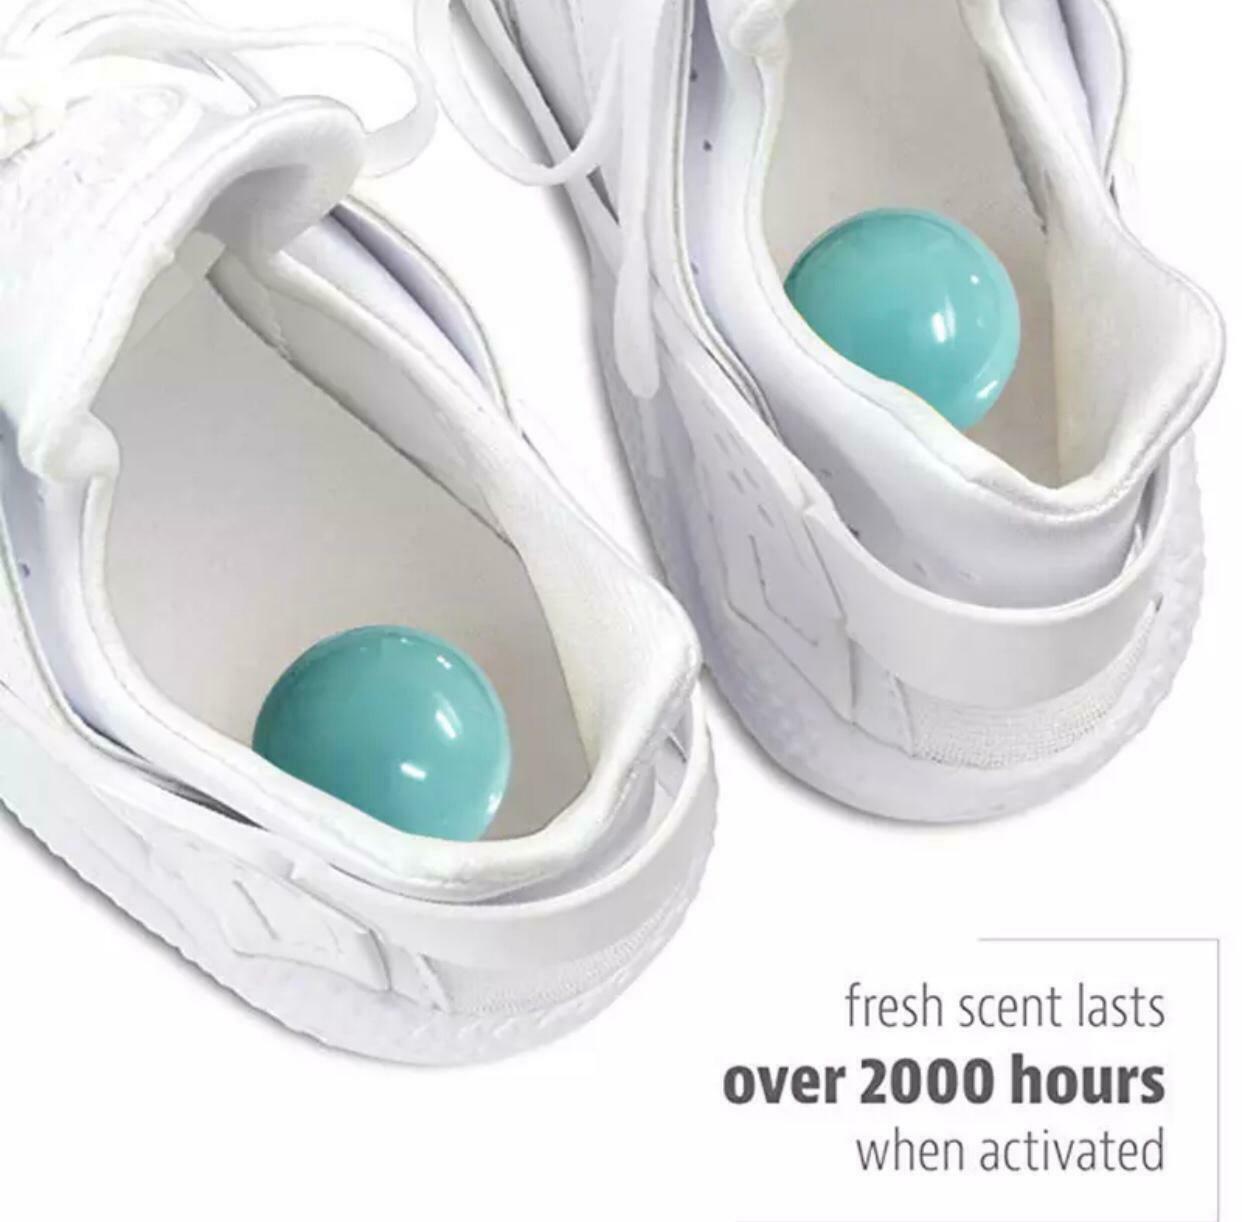 Balls Sneaker Perfume Balls For Shoes Gym Bag, Locker And Cars